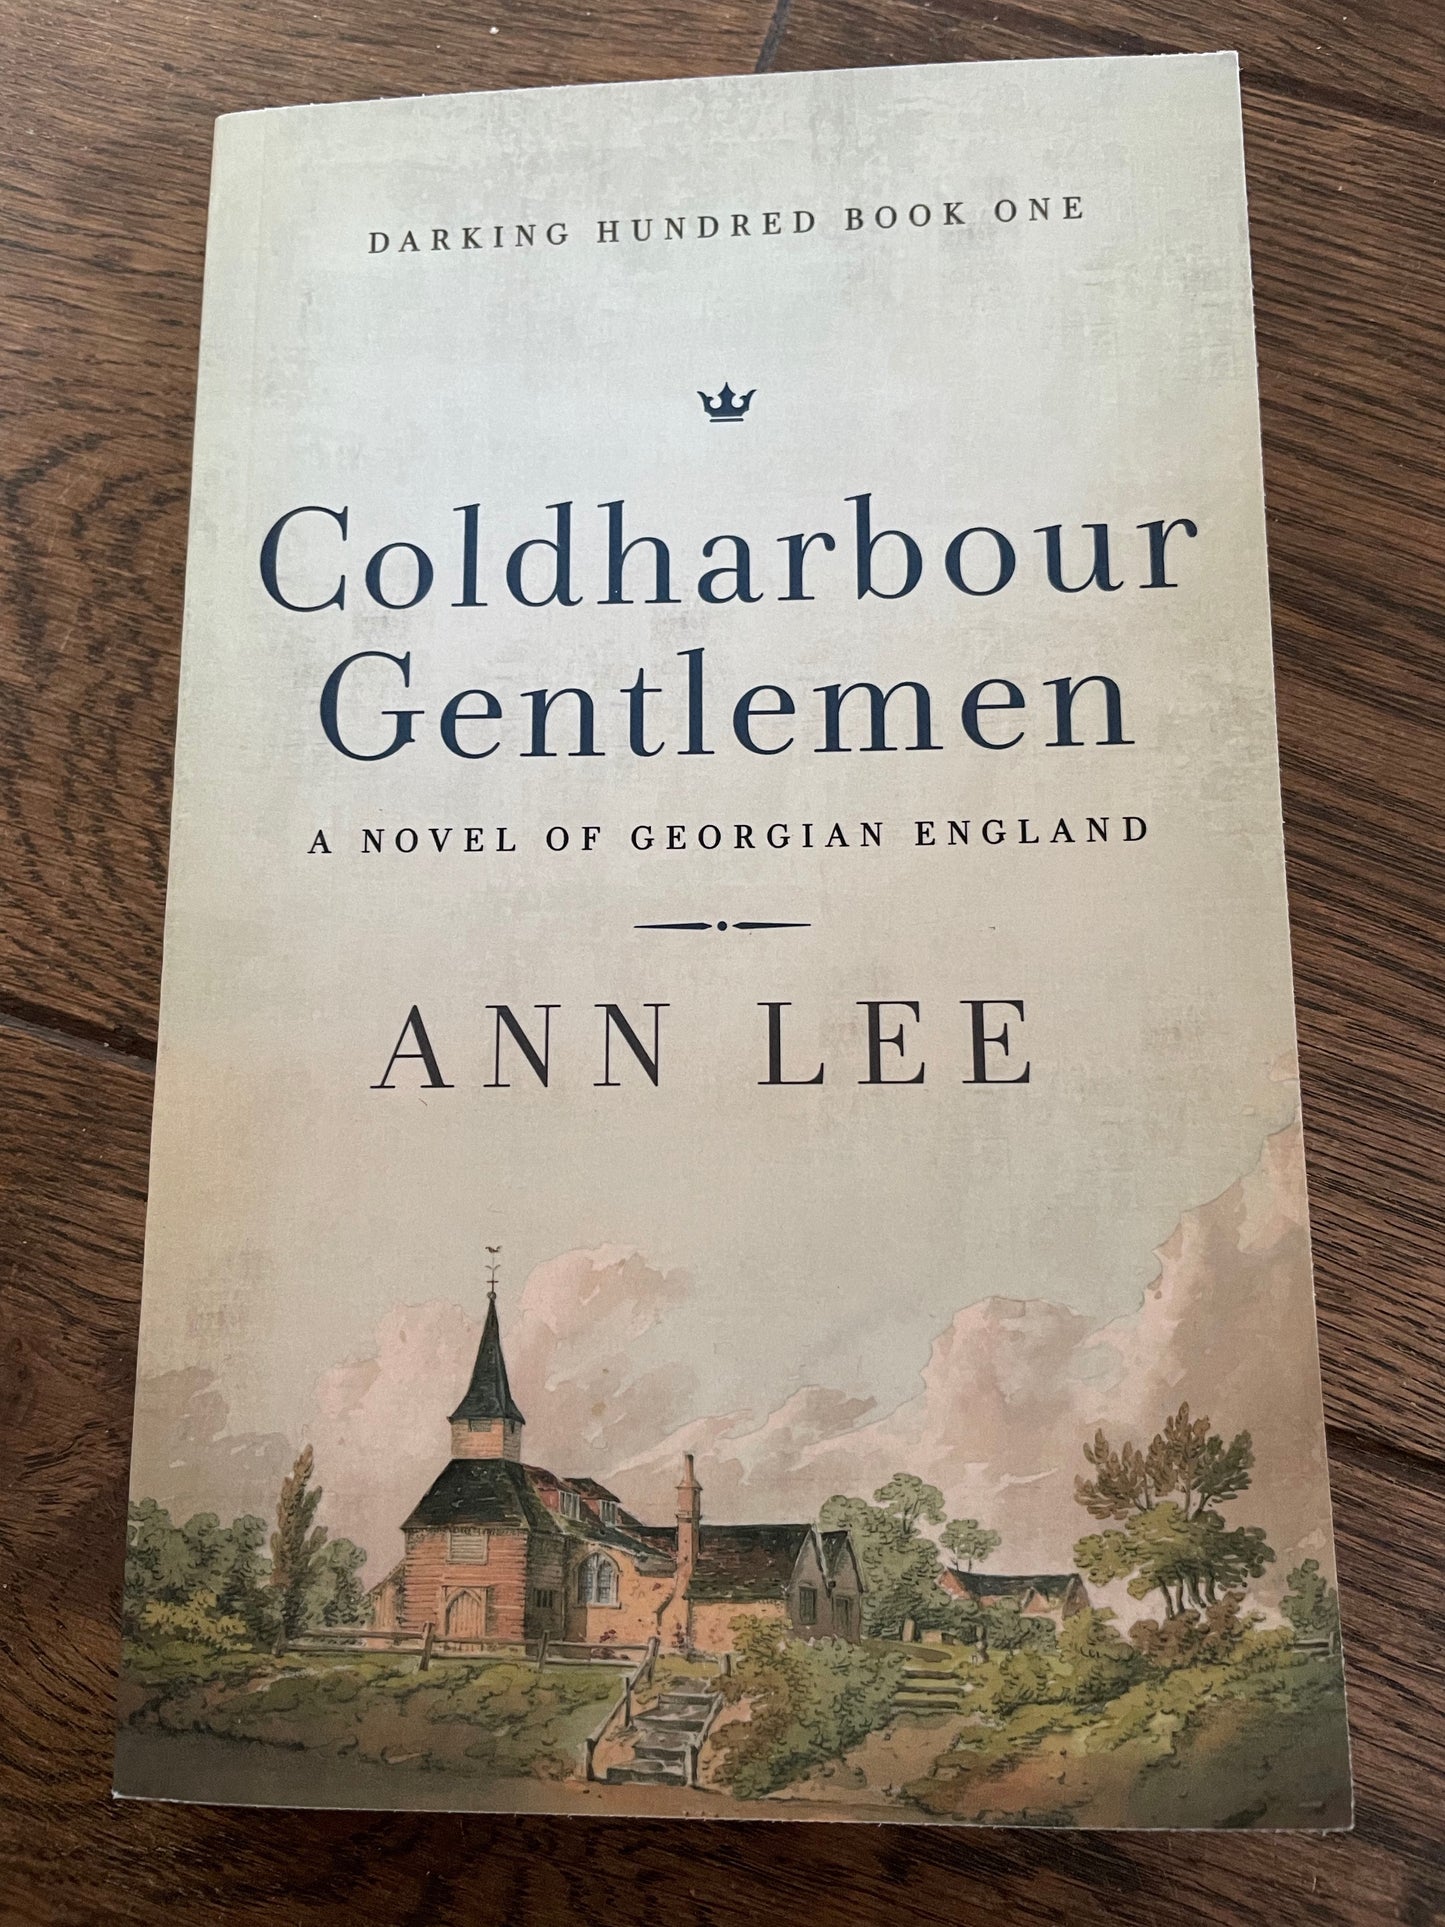 Coldharbour Gentlemen by Ann Lee